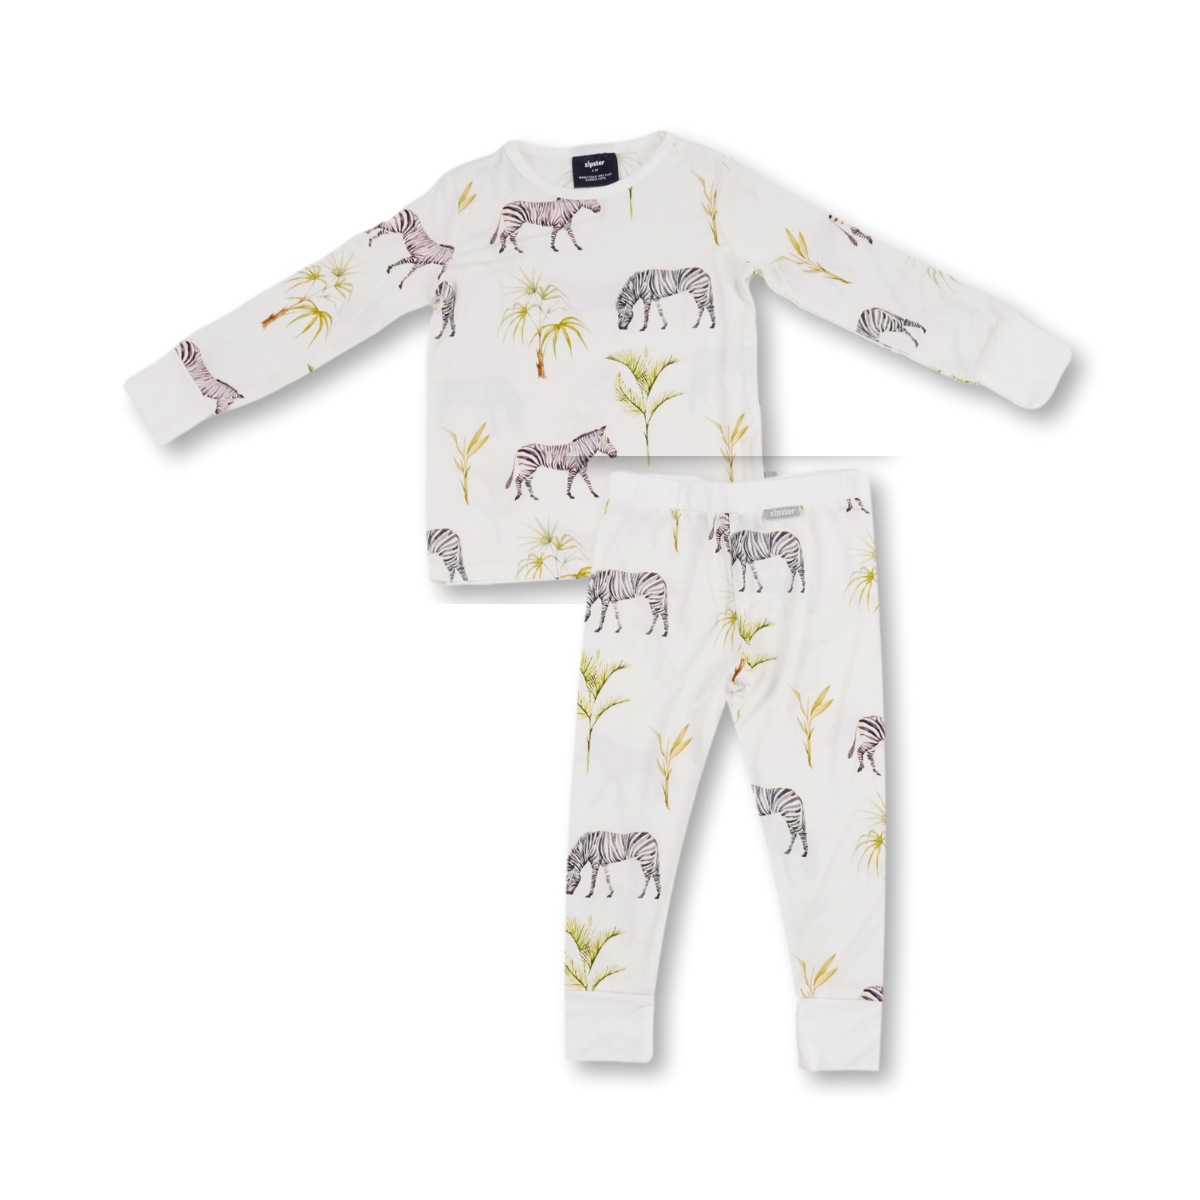 Ensemble de pyjamas pour enfants Grazing Zebra